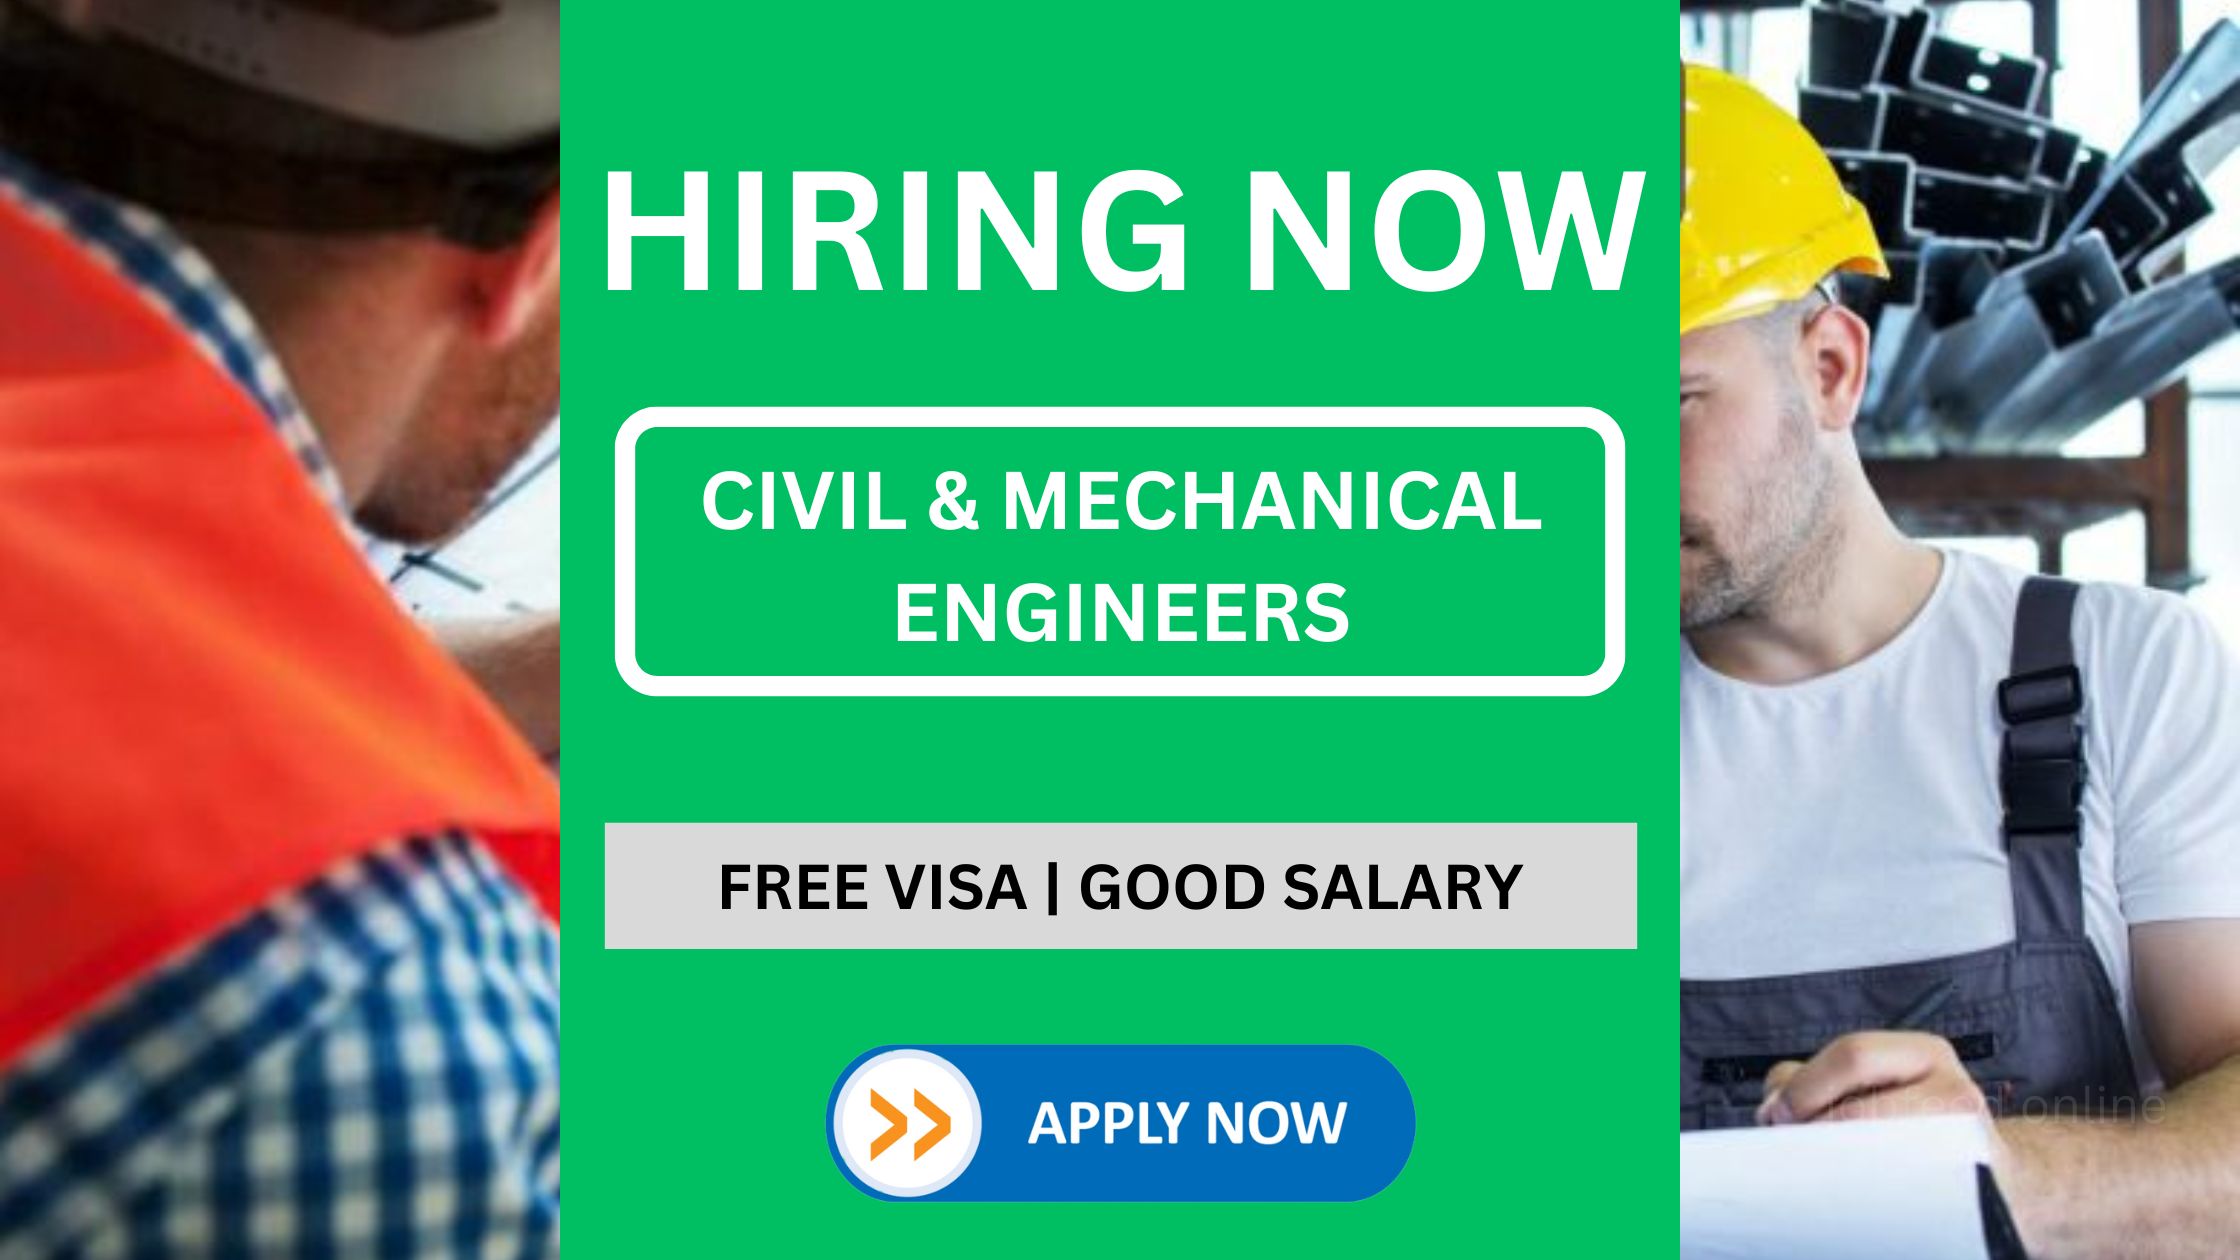 Civil Engineer and Mechanical Engineer Vacancies in Dubai